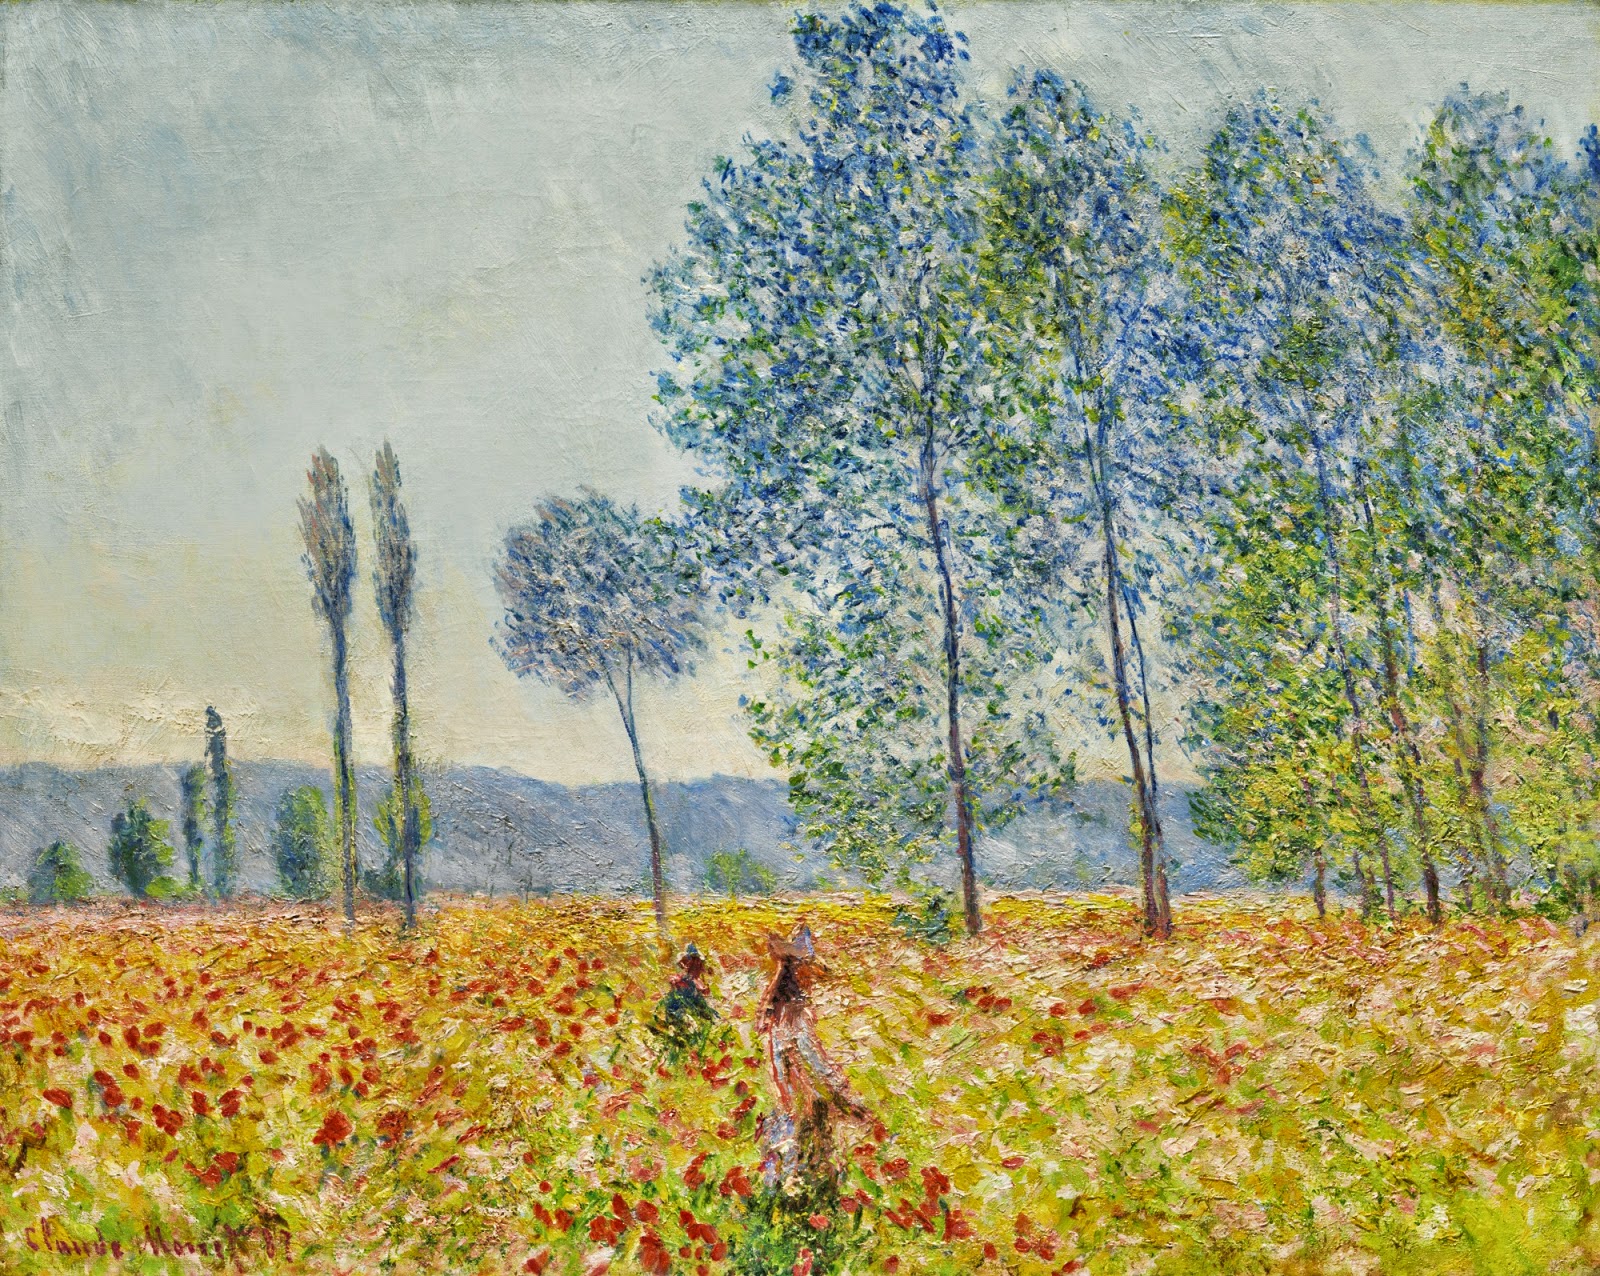 Claude+Monet-1840-1926 (509).jpg